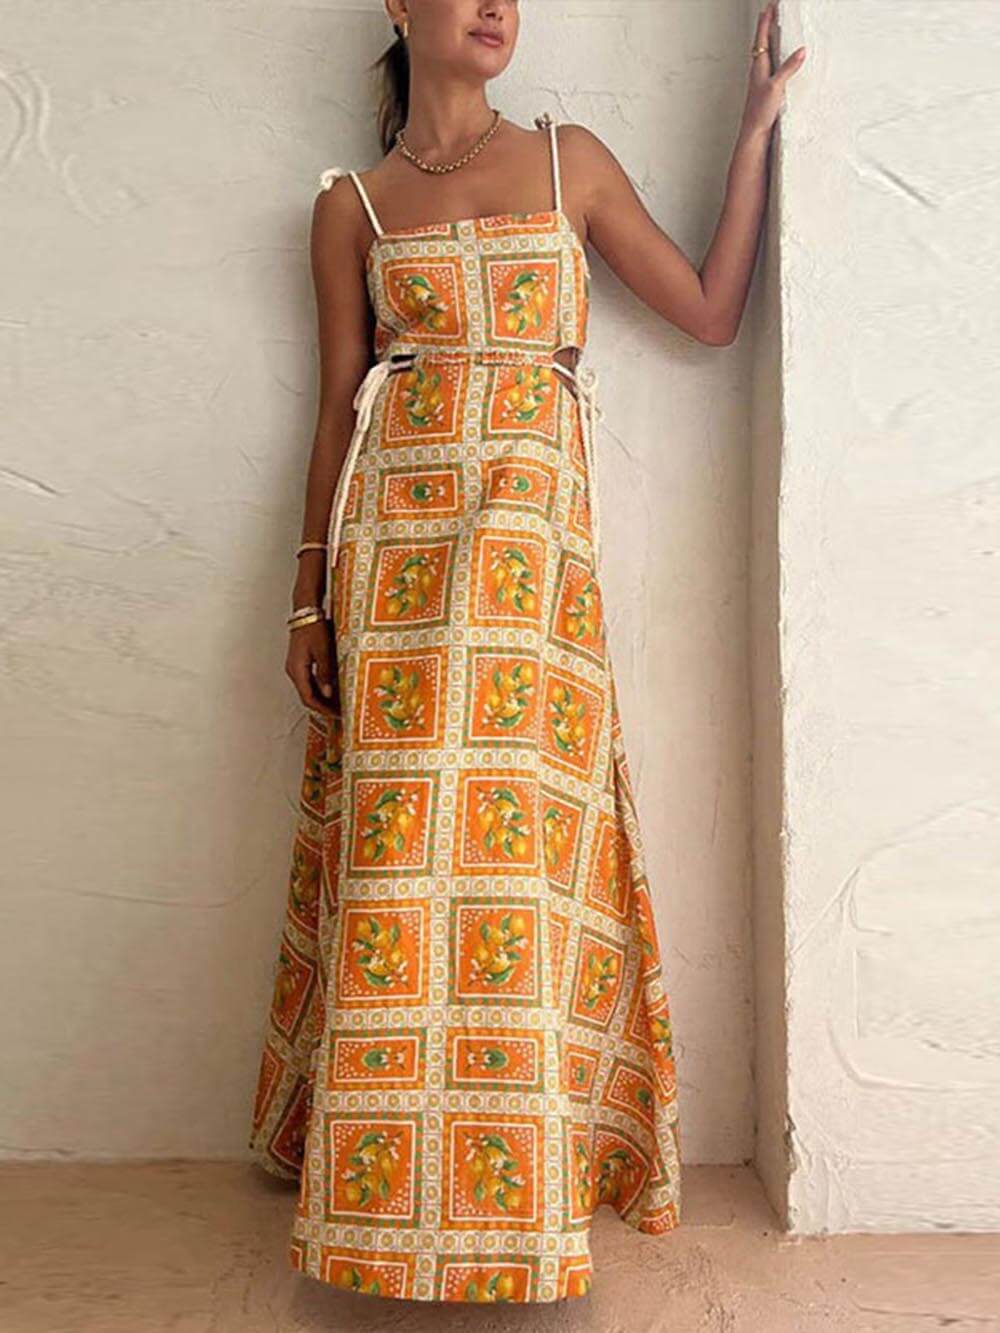 Unieke jurk met bandjes en citroenprint